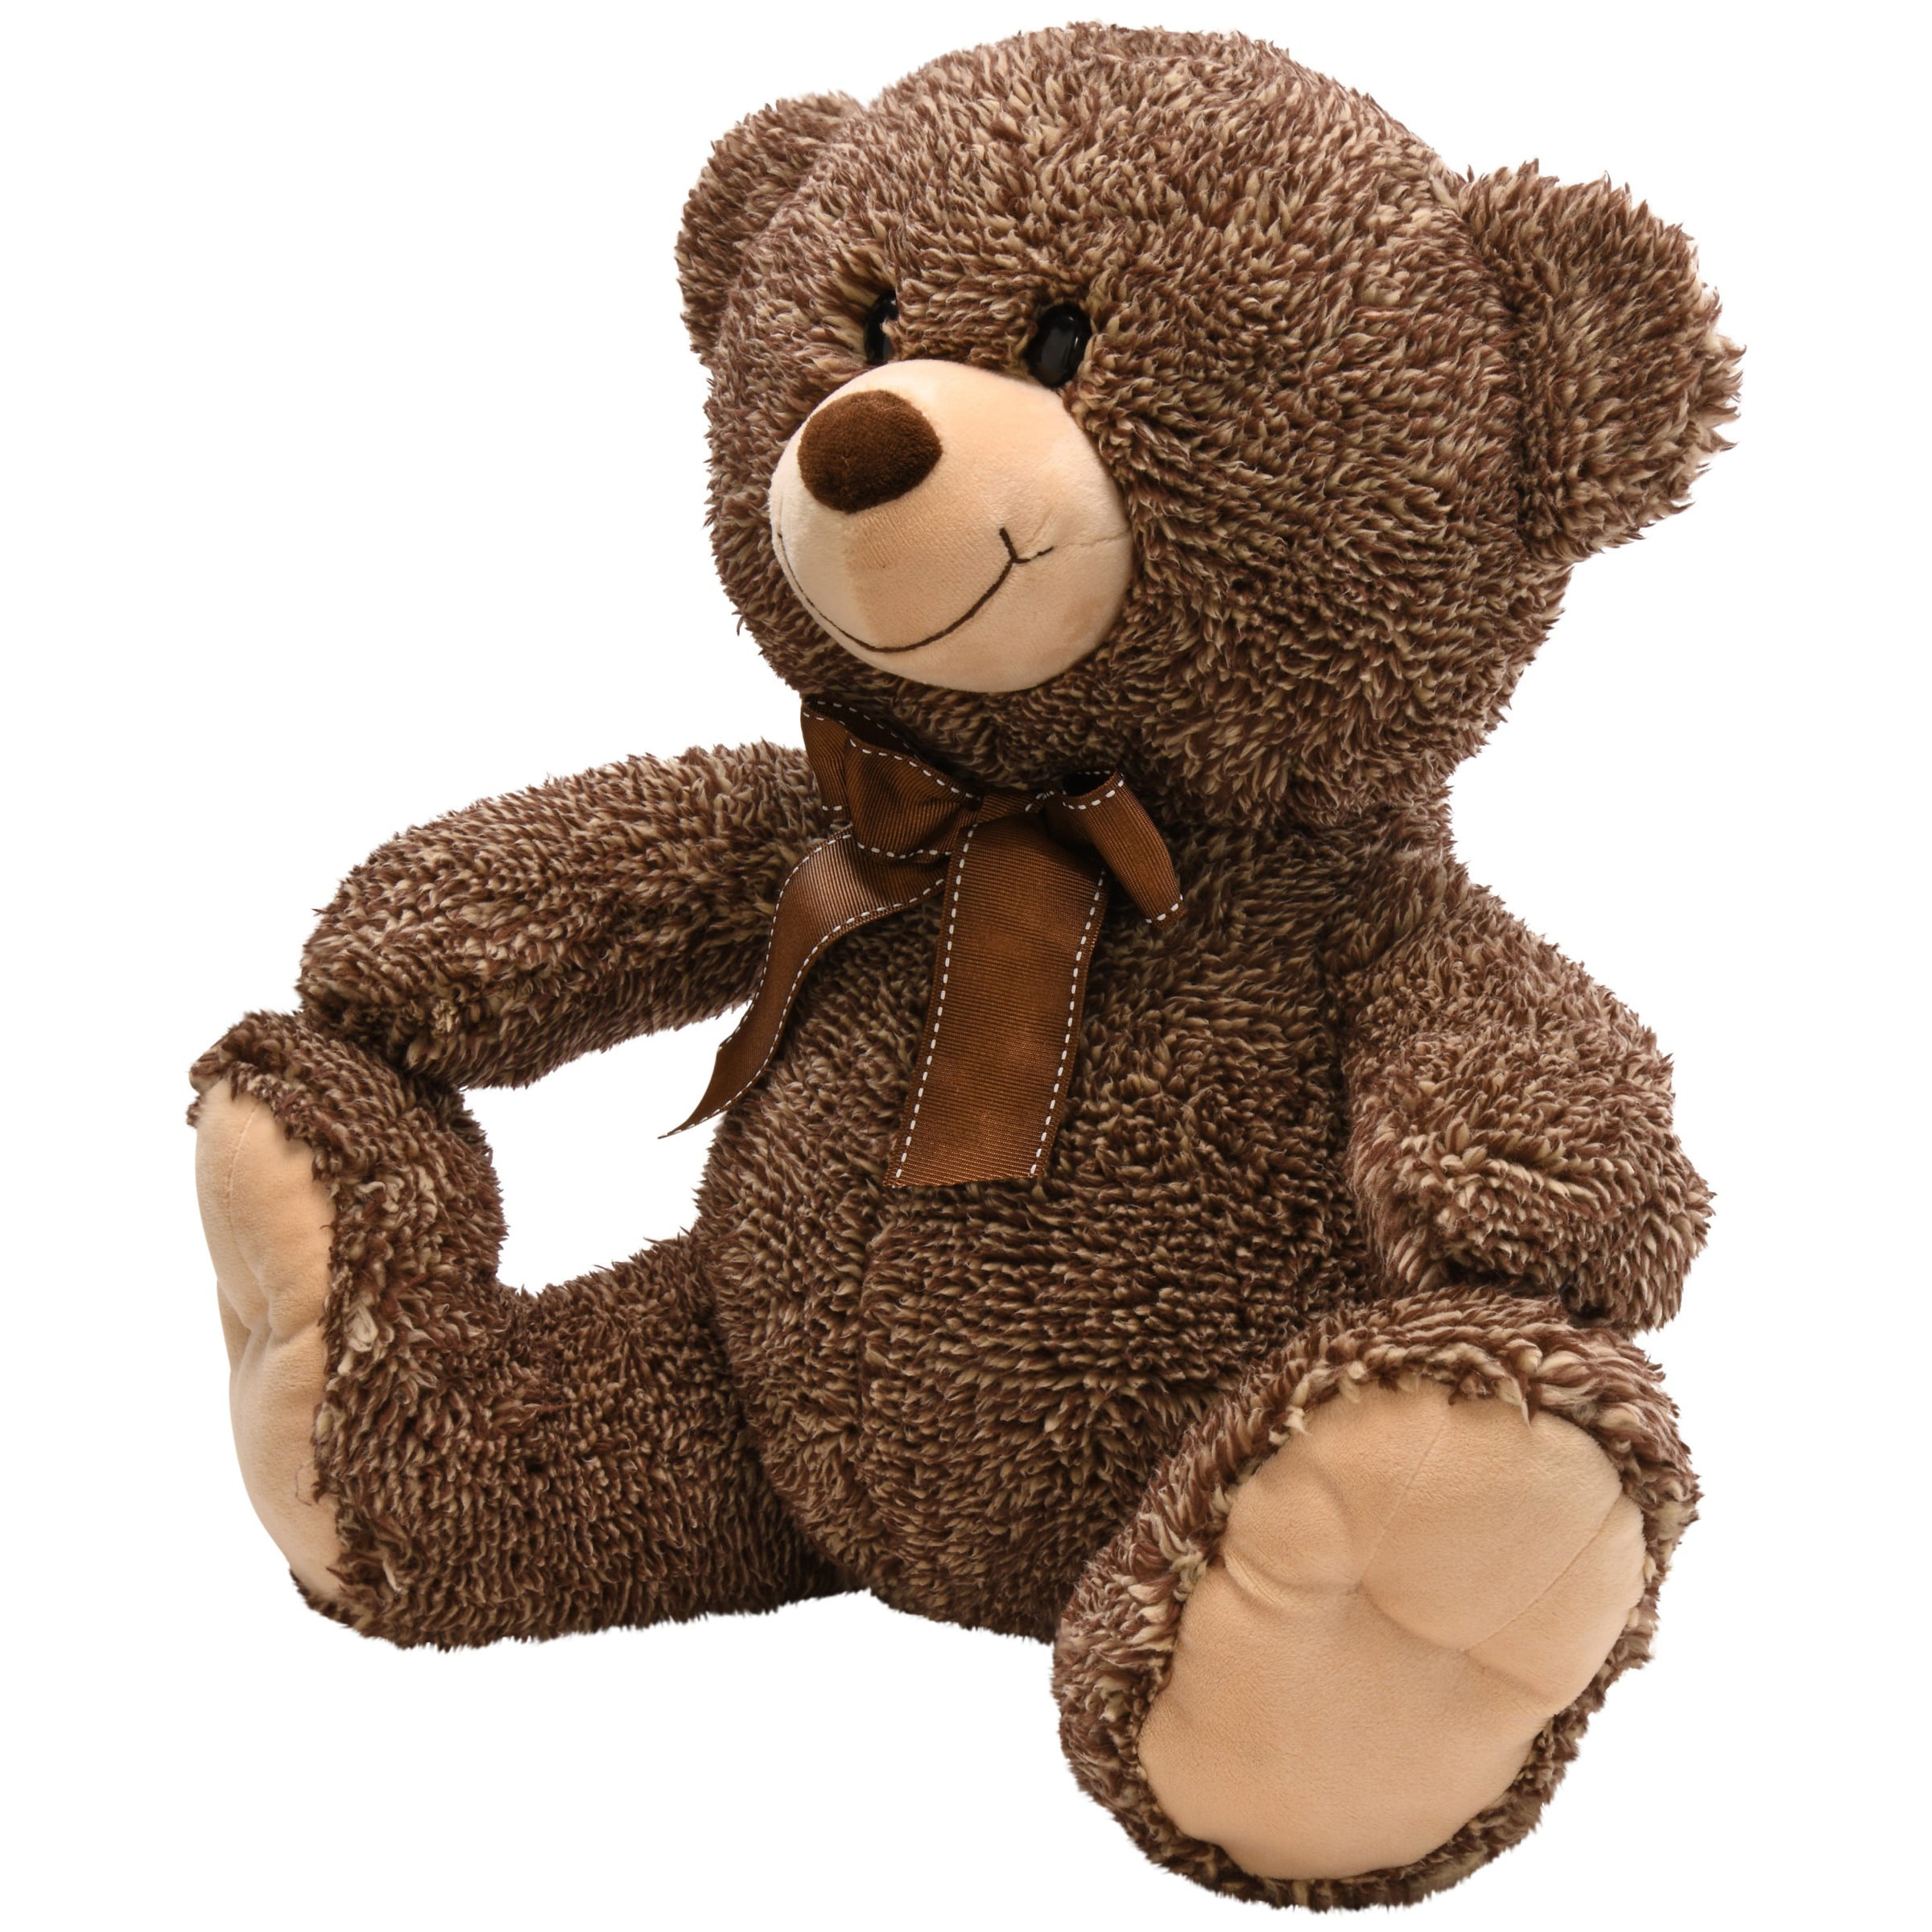 A brown teddy bear. Brown stuff.